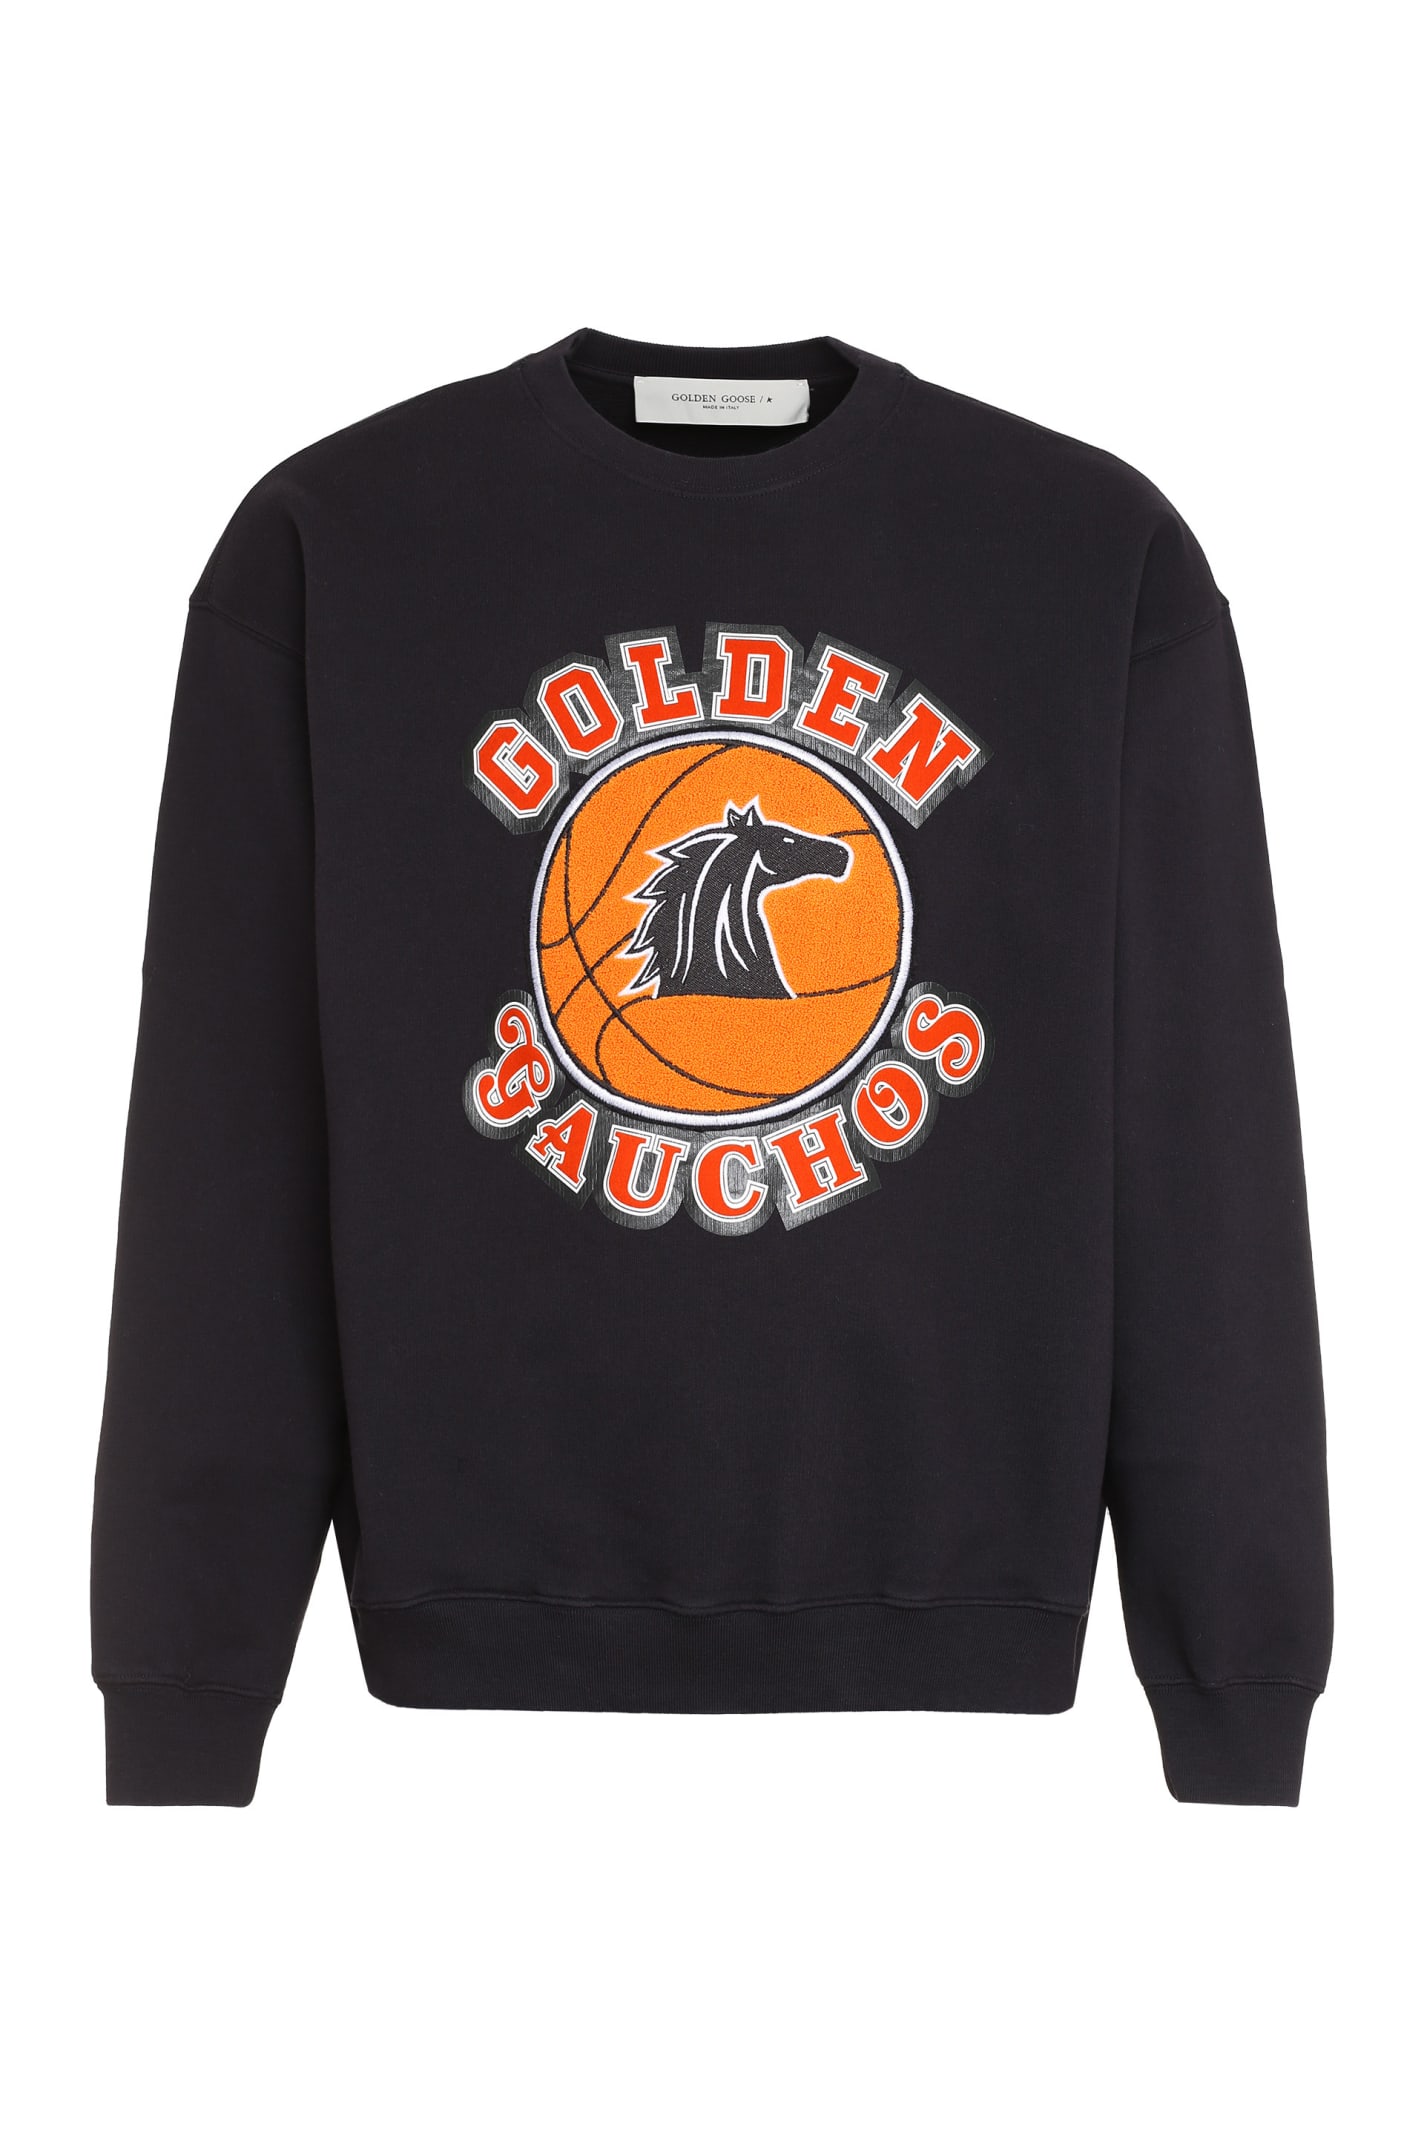 Golden Goose Arsiero Cotton Sweatshirt